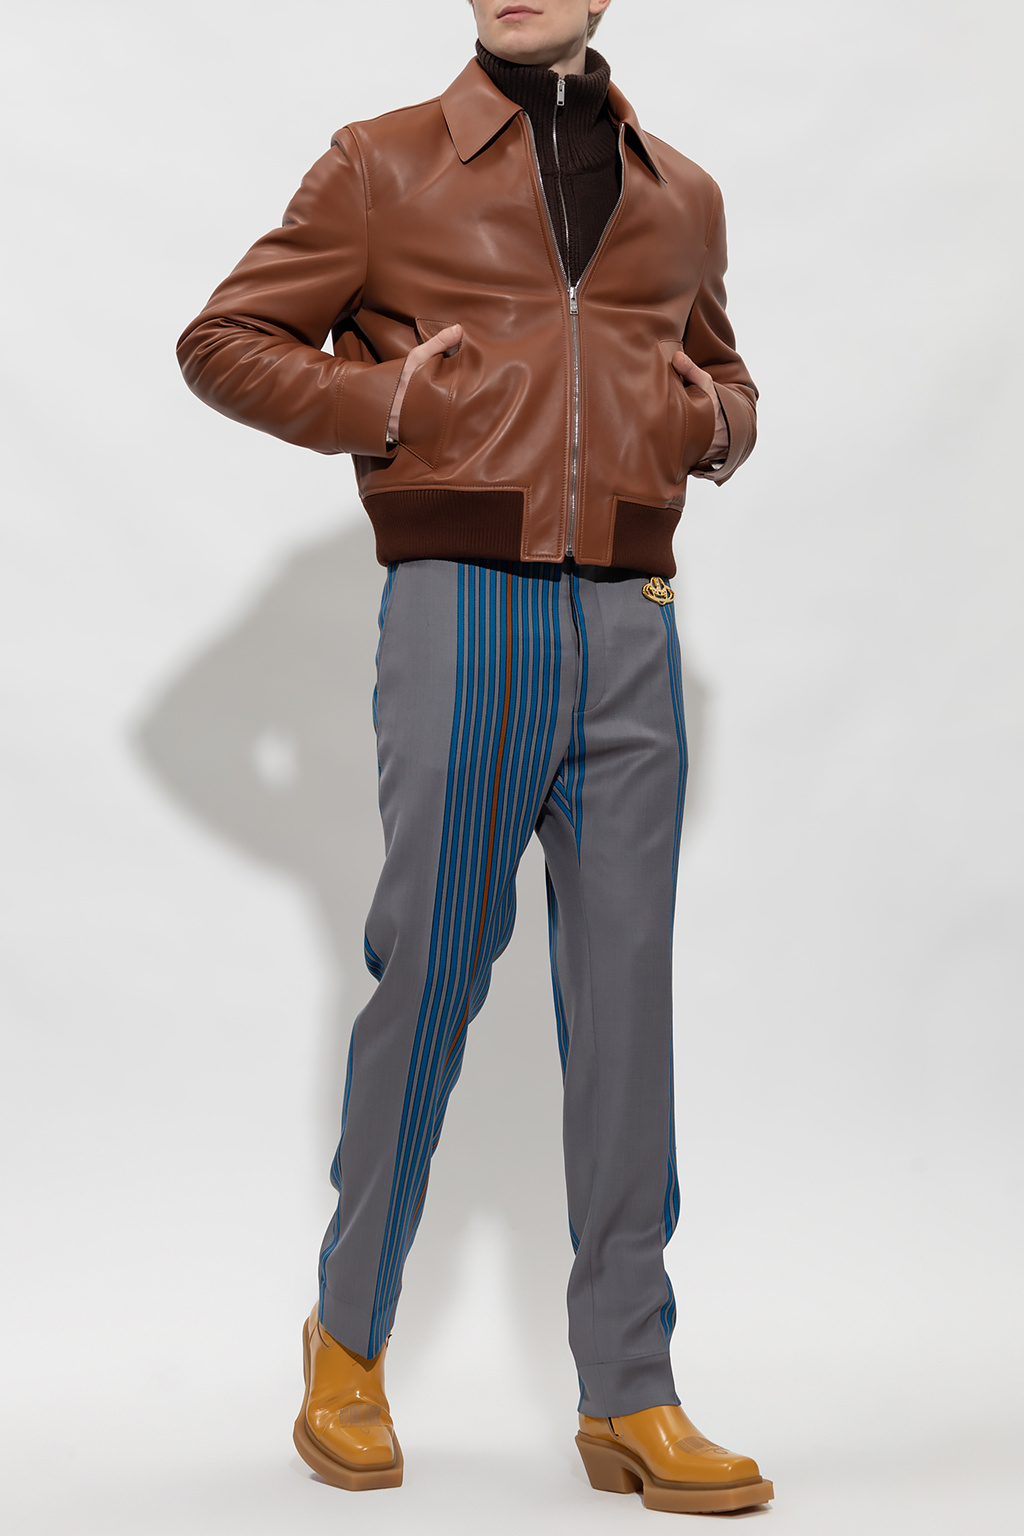 Vivienne Westwood Pleat-front trousers